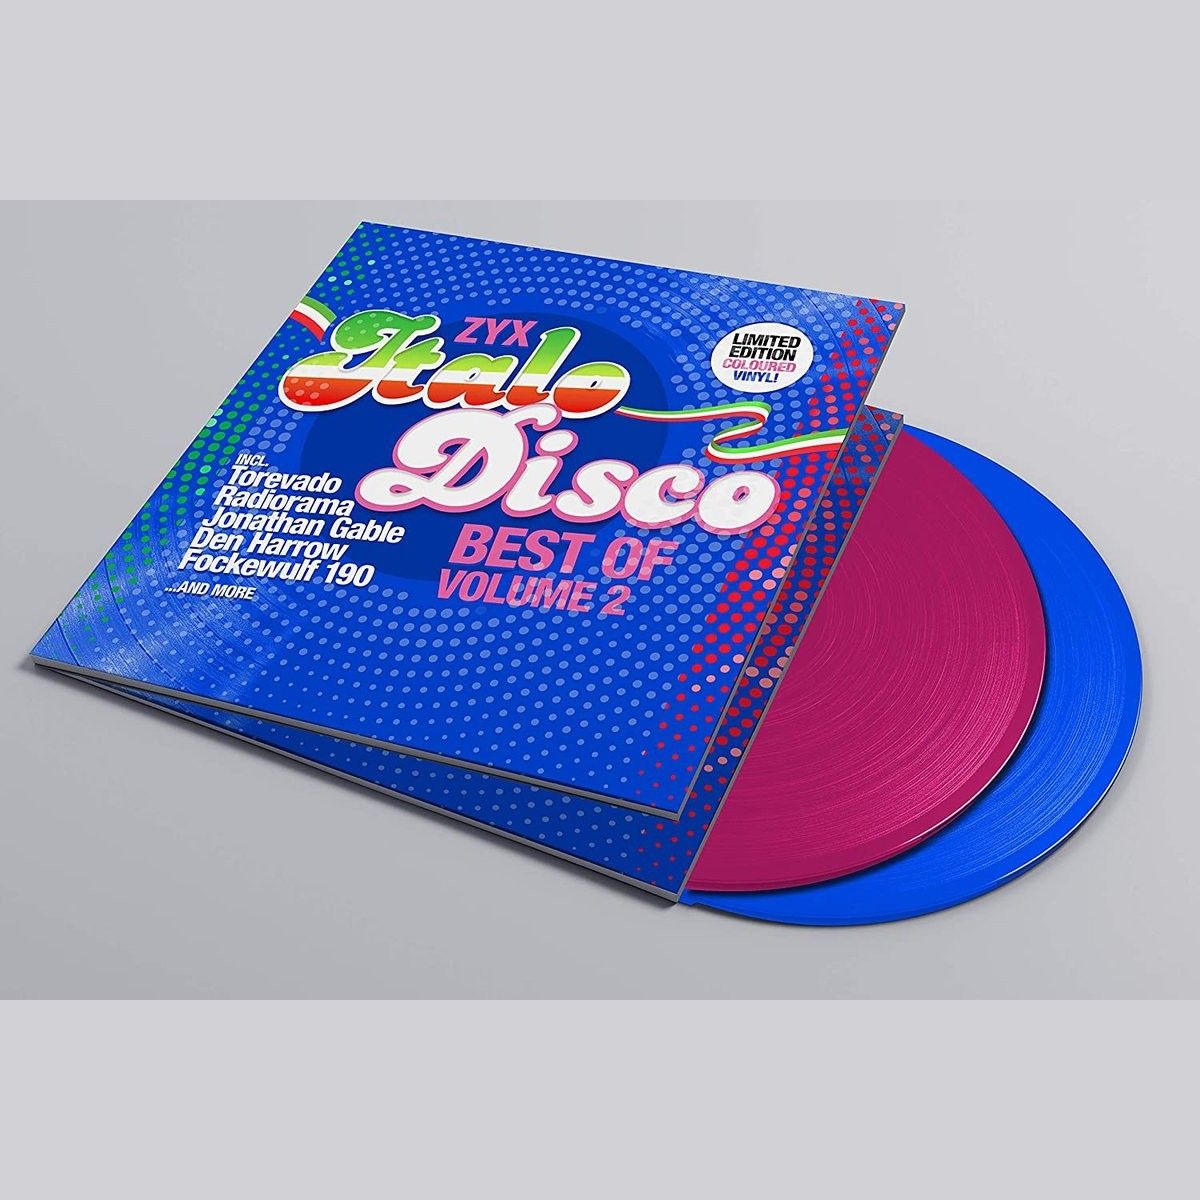 Italo disco new generation vol 24. Итало диско. Italo Disco Vol 2. Va - ZYX Italo Disco Spacesynth collection 2. The best of Italo Disco.